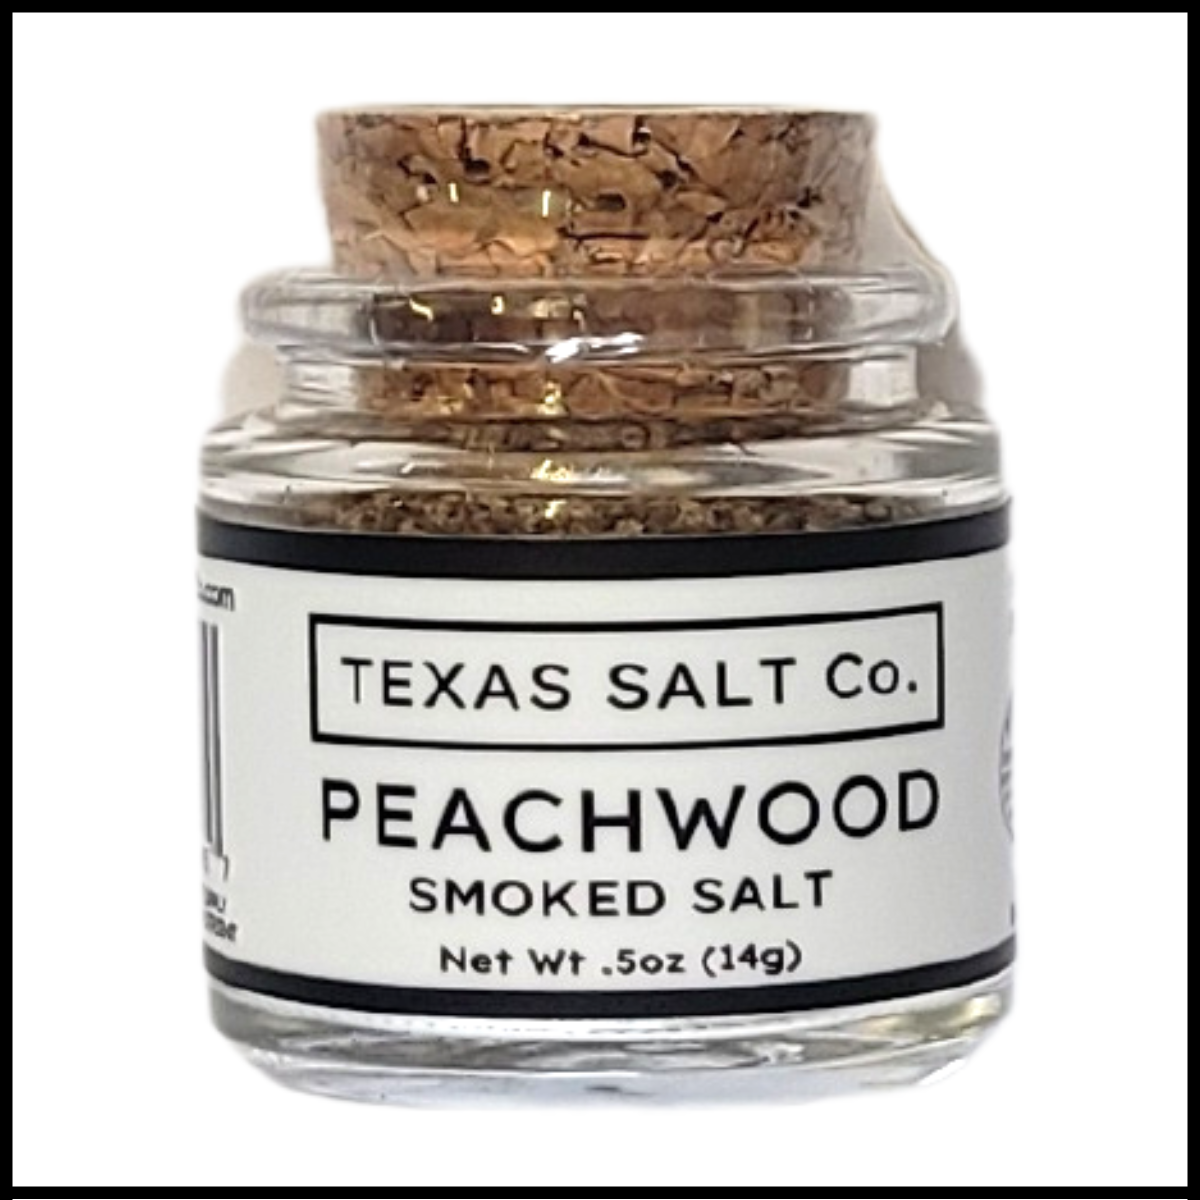 peachwood smoked salt cork top